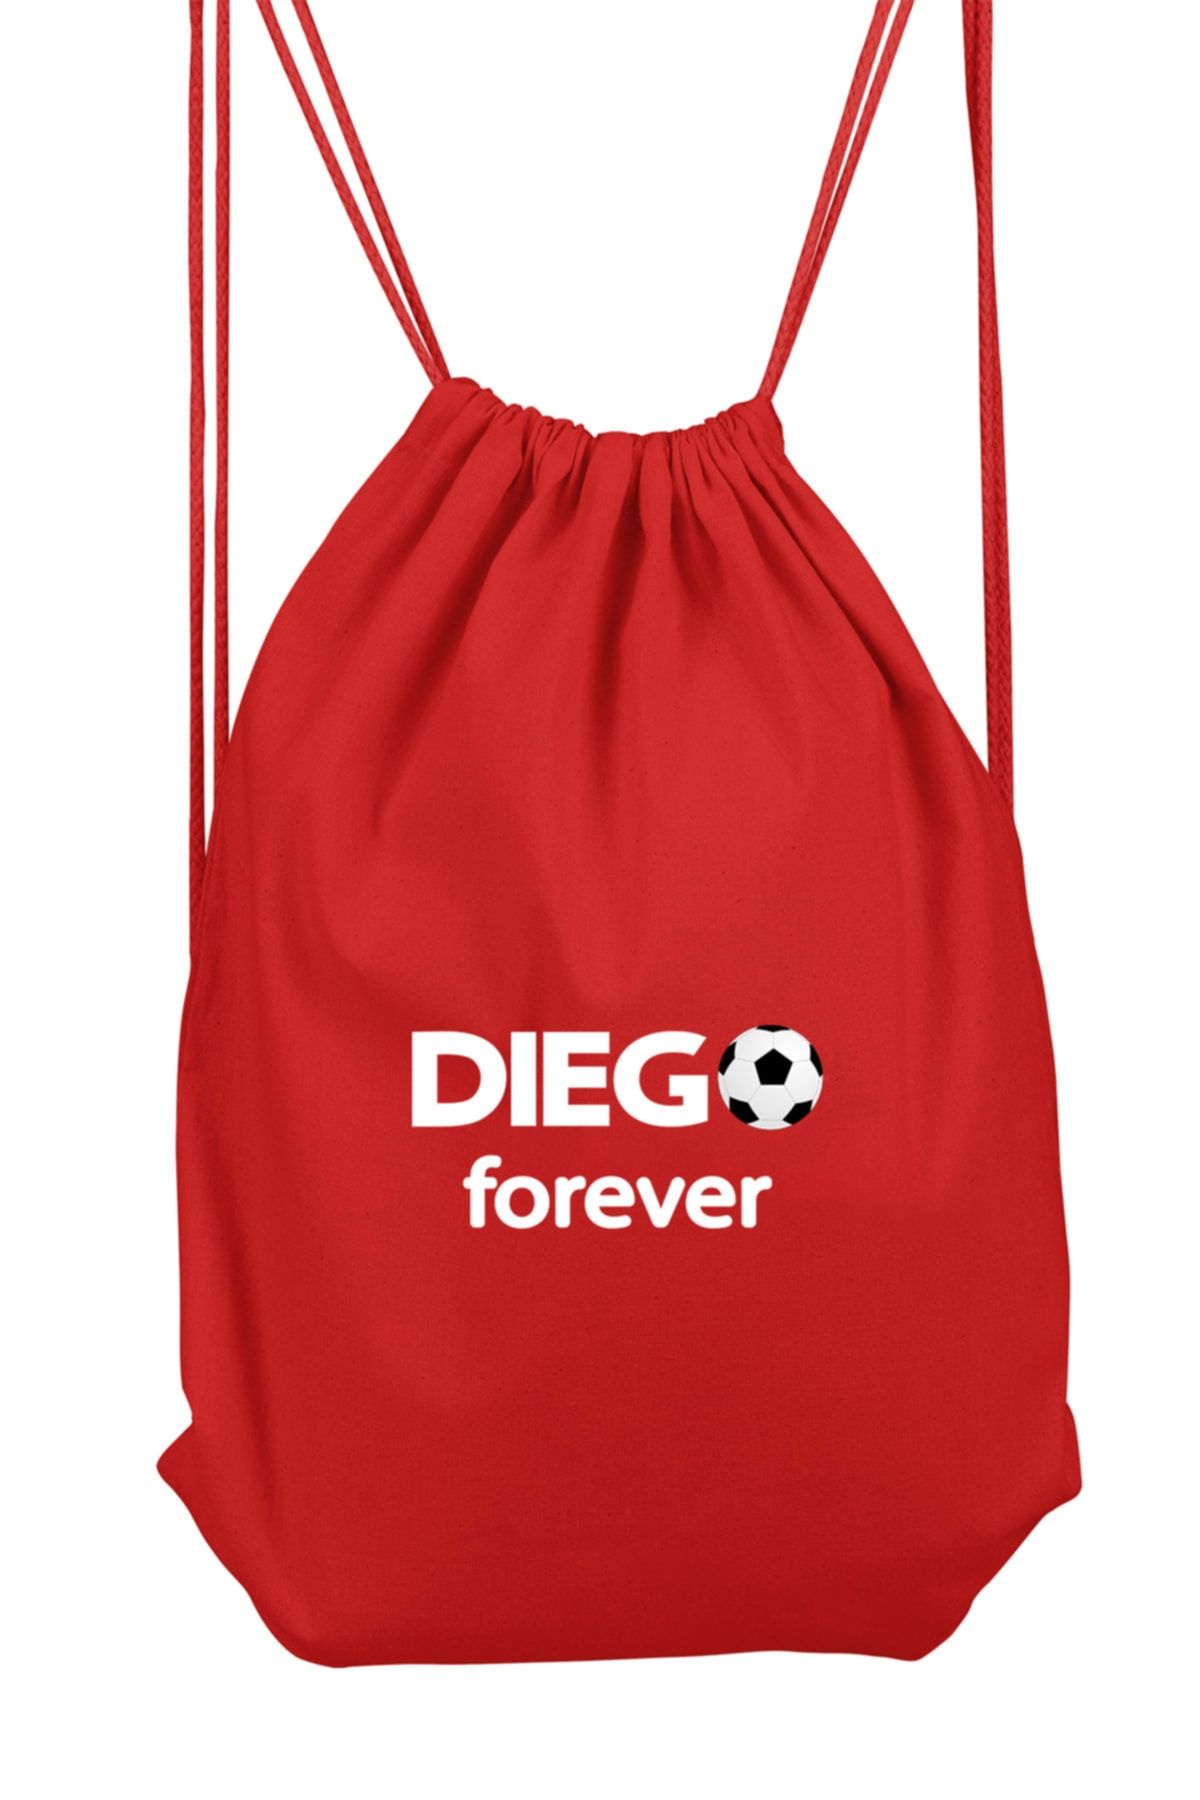 Genel Markalar Diego Forever Spor Sırt Çantası 36x50 Cm Bll1175